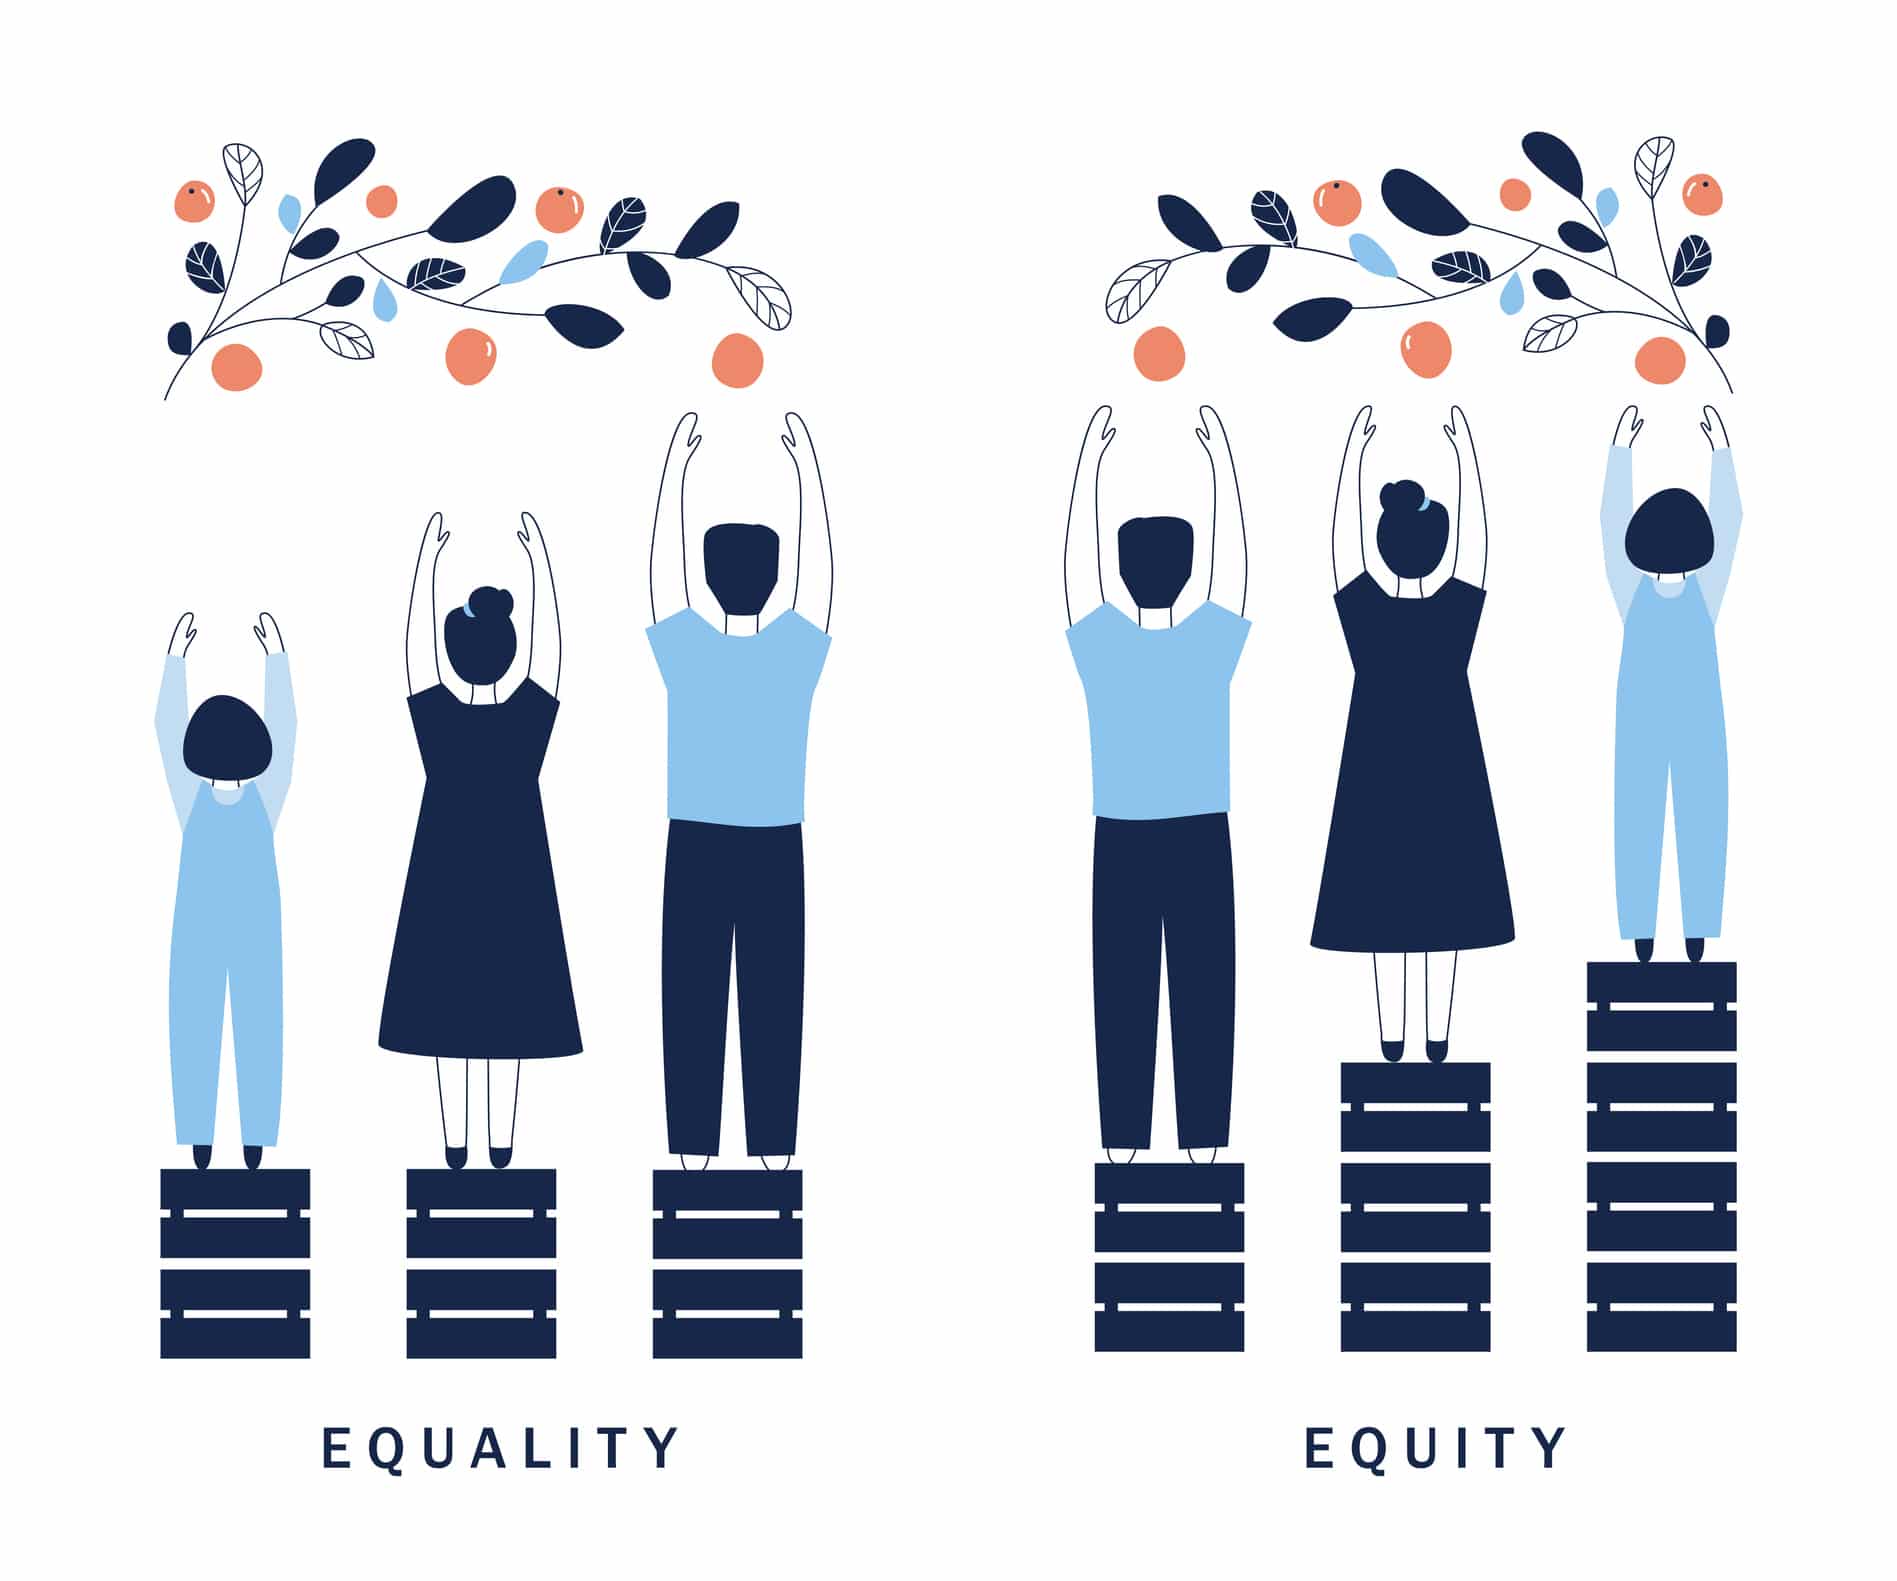 Visual representing equity